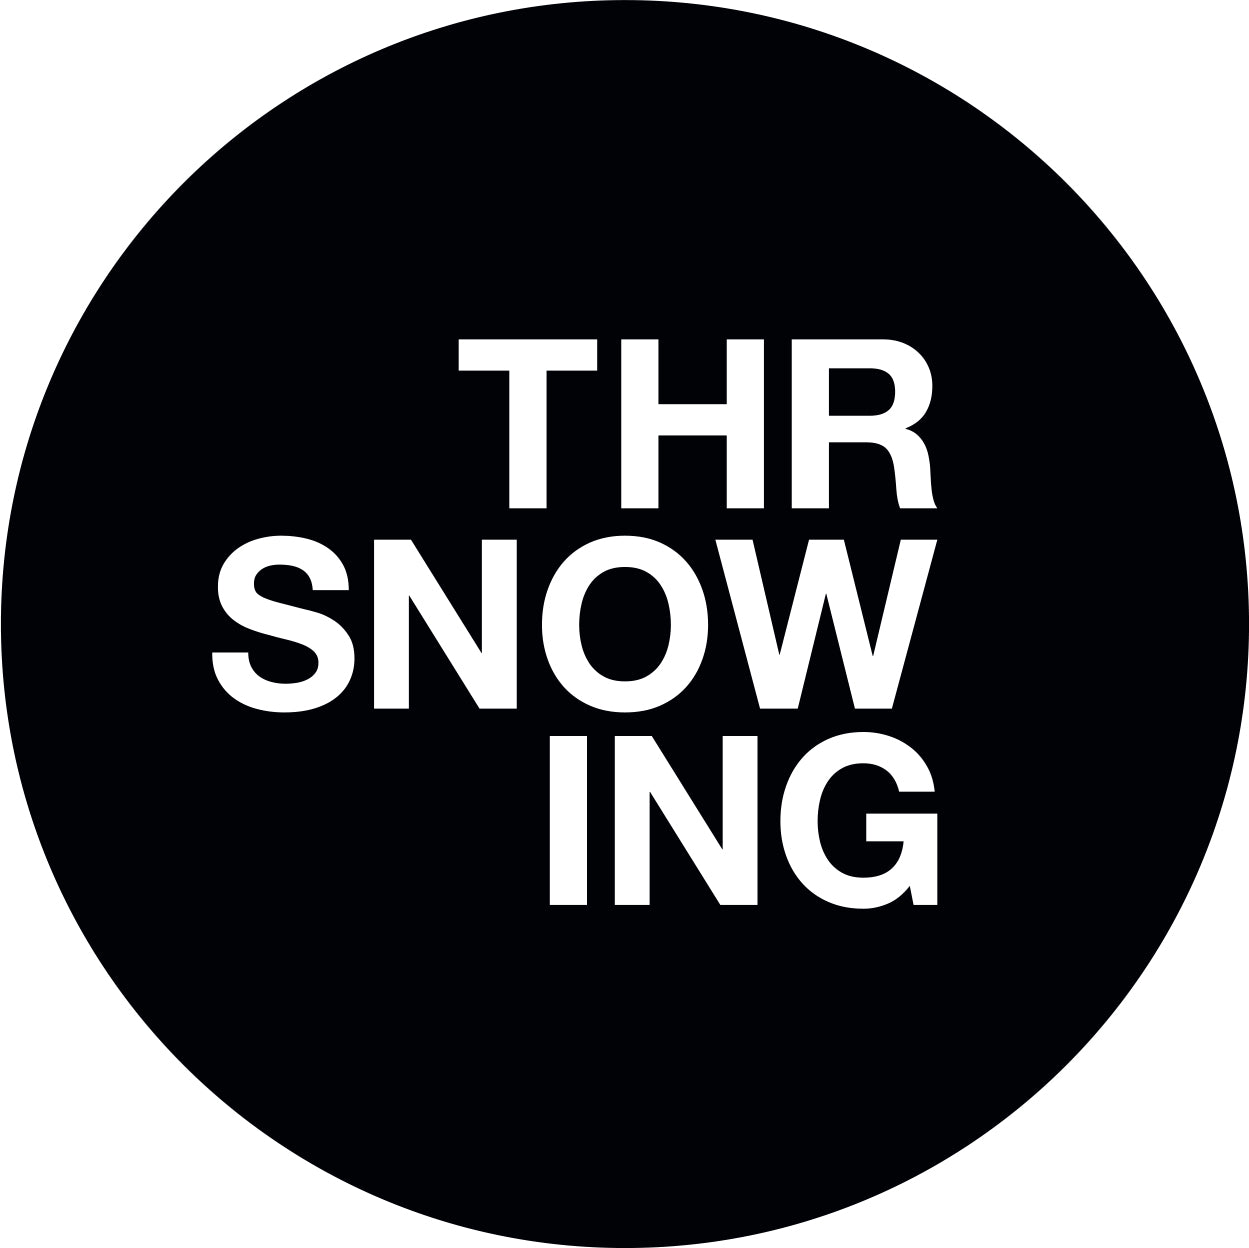 Throwing Snow - Mosaic VIPs MP3